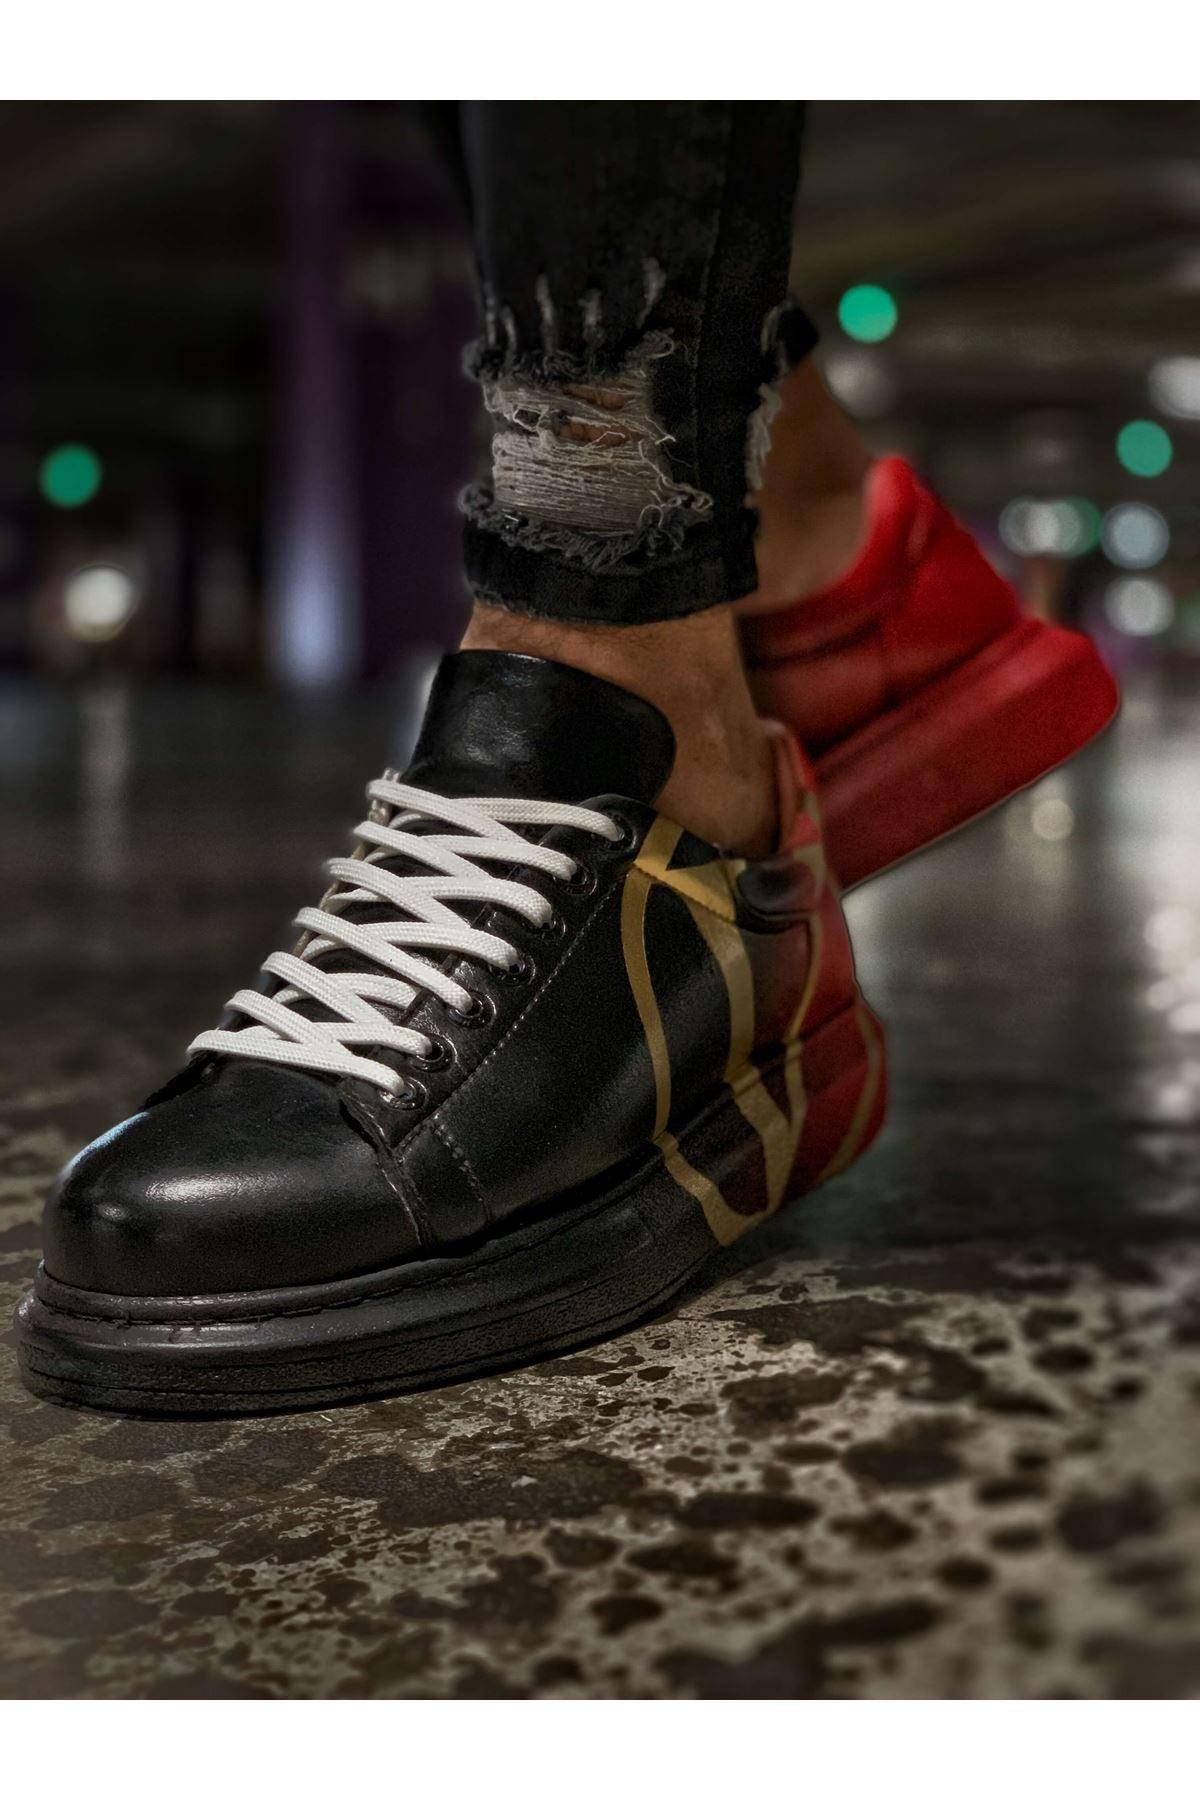 CH254 Men's Unisex Red-Black Casual Sneaker Sports Shoes - STREET MODE ™